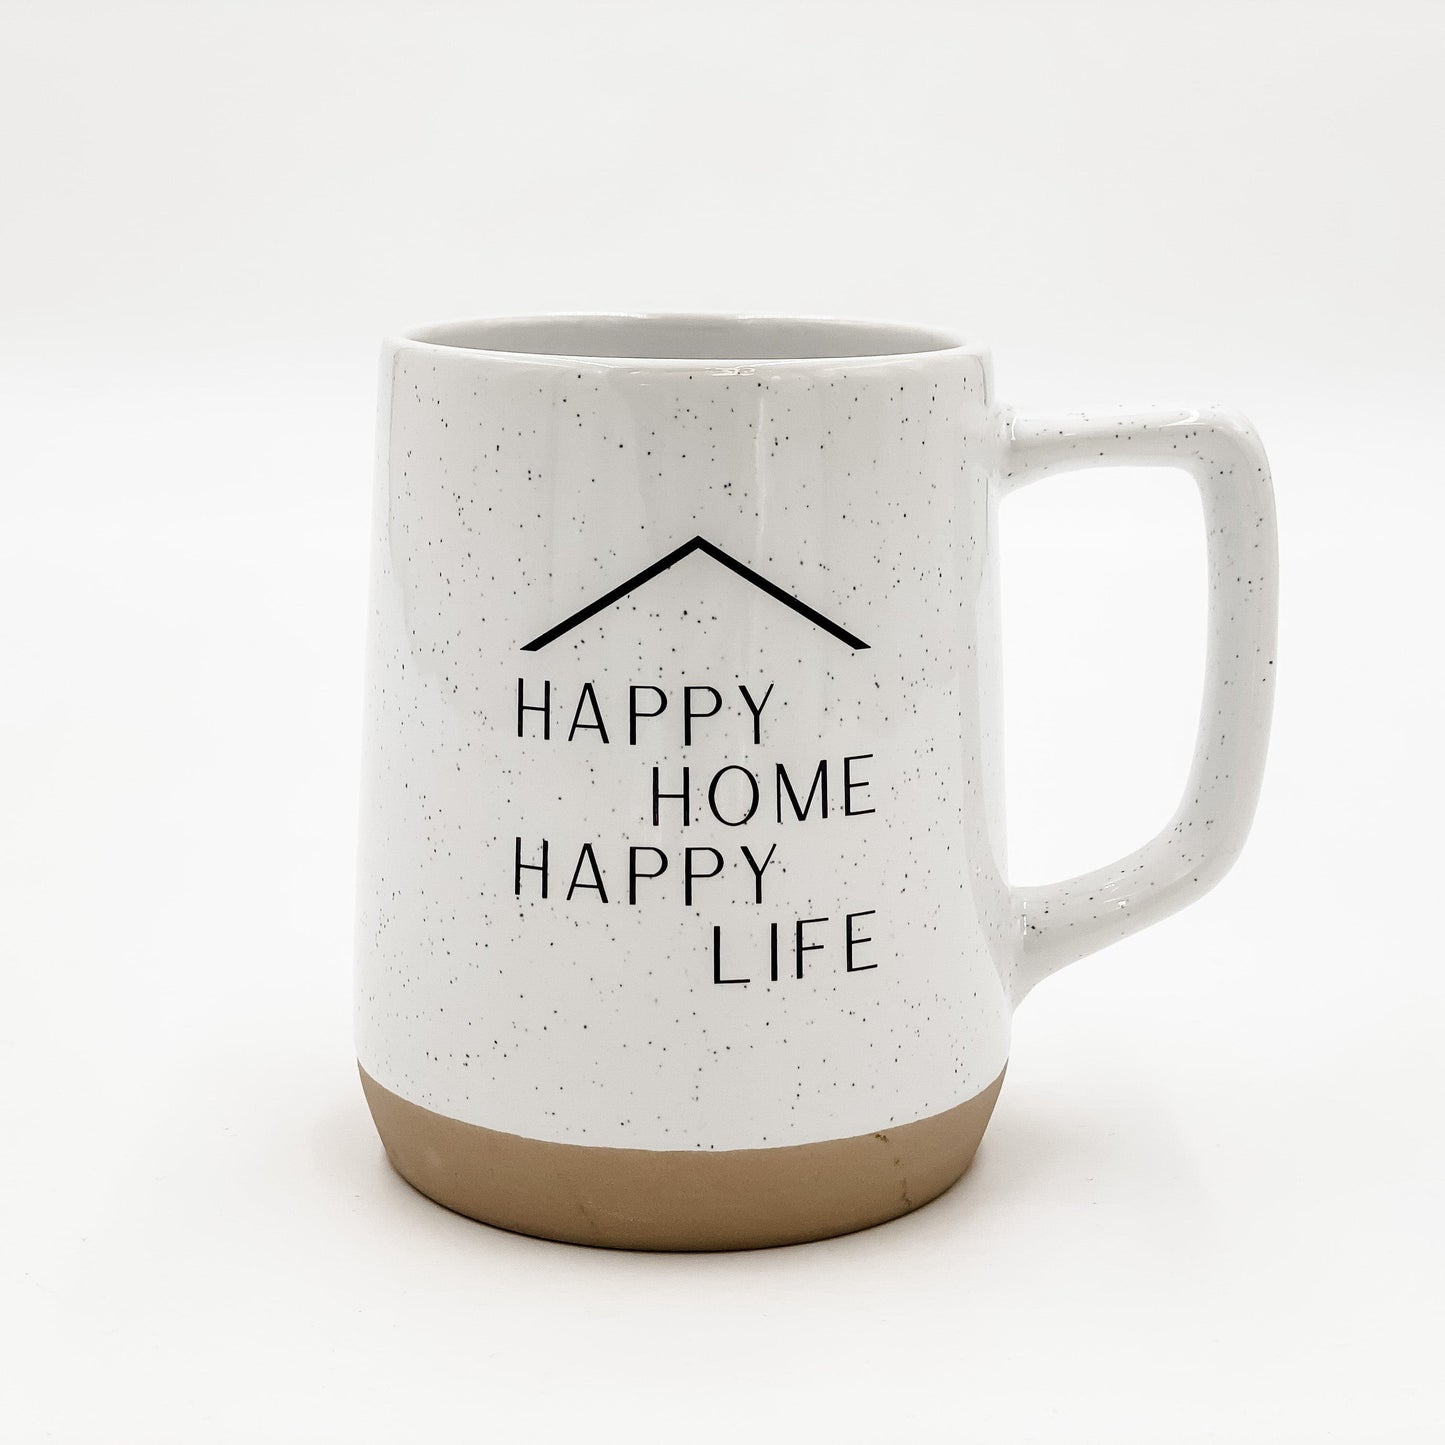 'Happy Home Happy Life' white mug